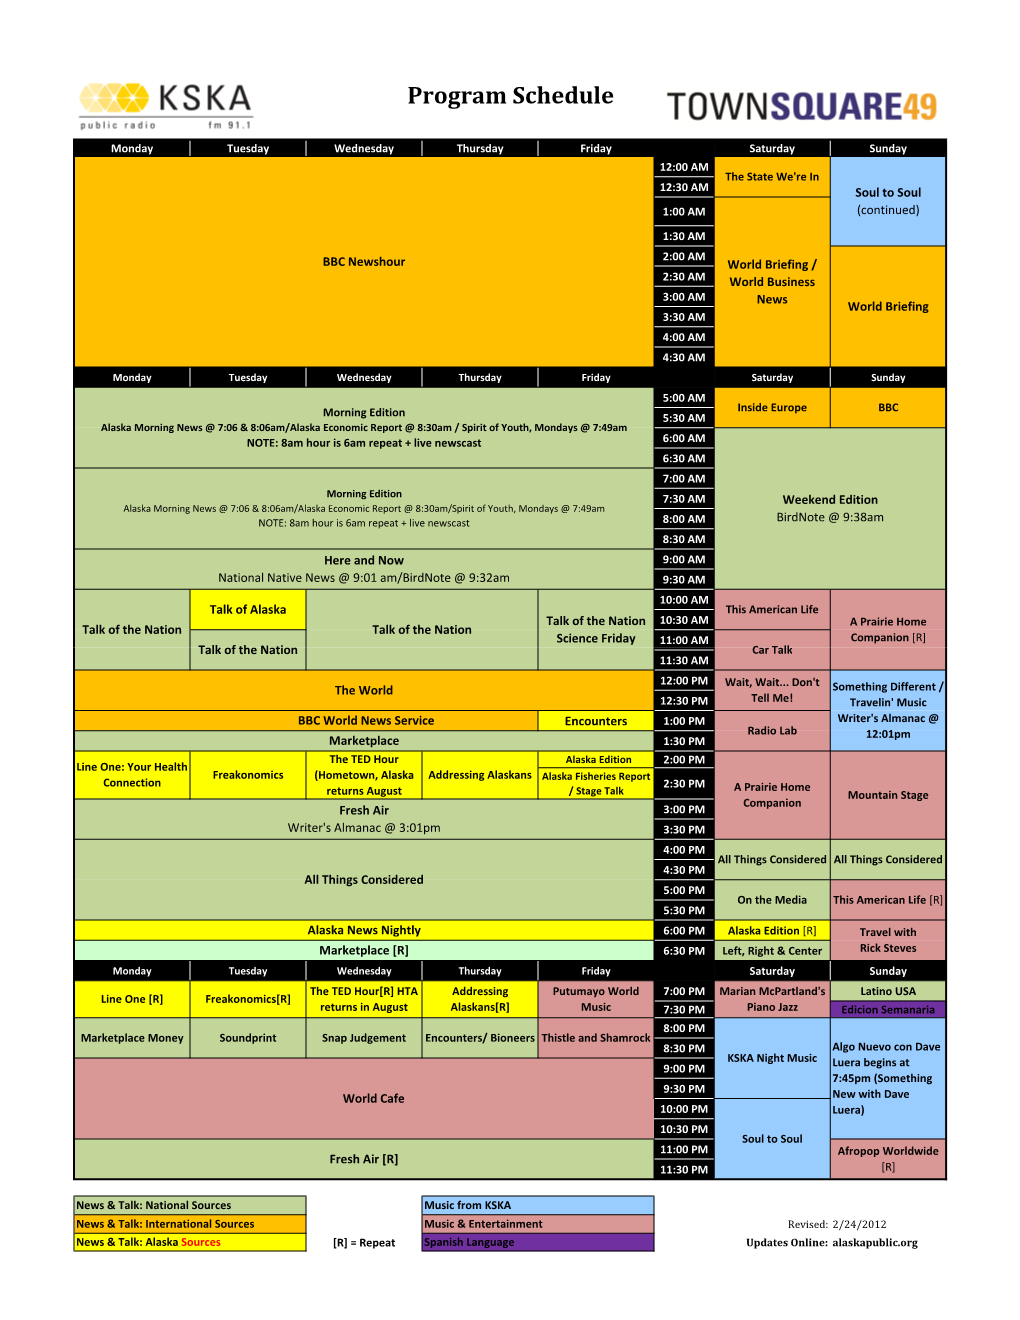 KSKA 91.1FM Program Schedule July 2012